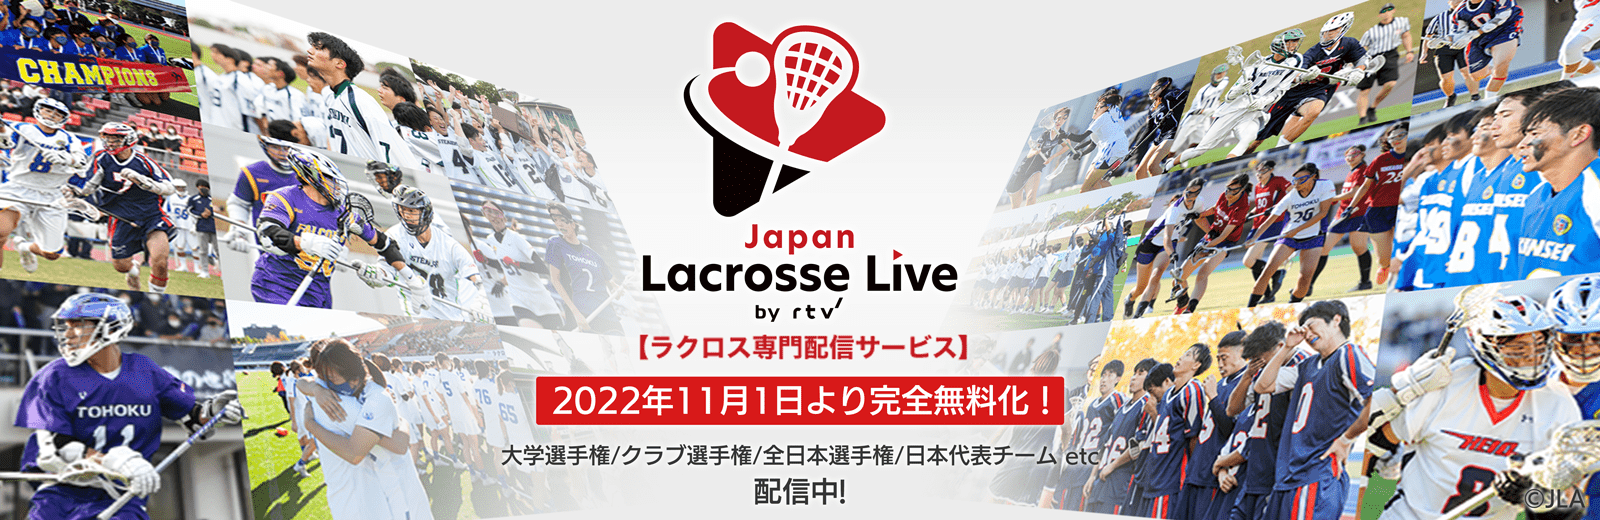 Japan Lacrosse Live by rtv